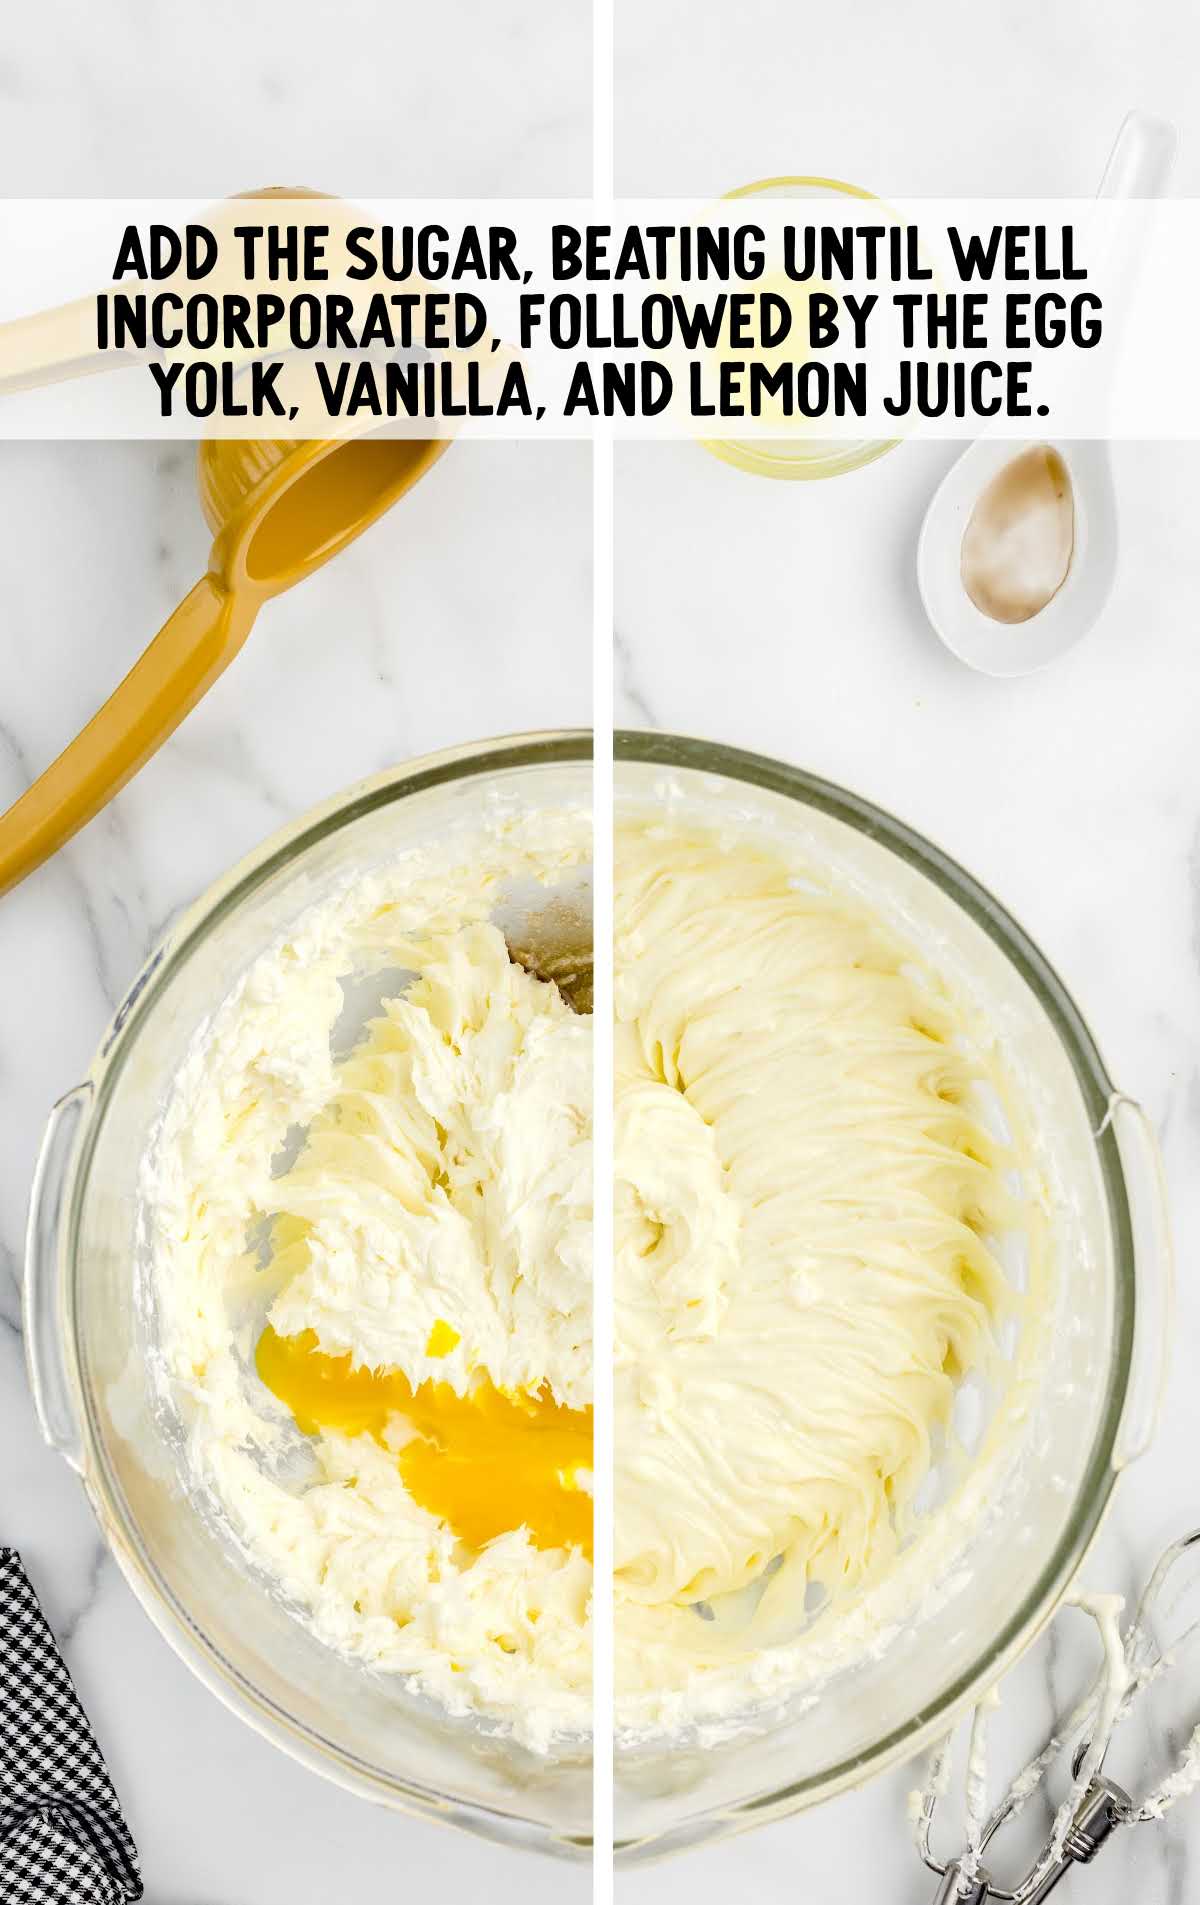 egg yolk, vanilla and lemon juice, and sugar combined together